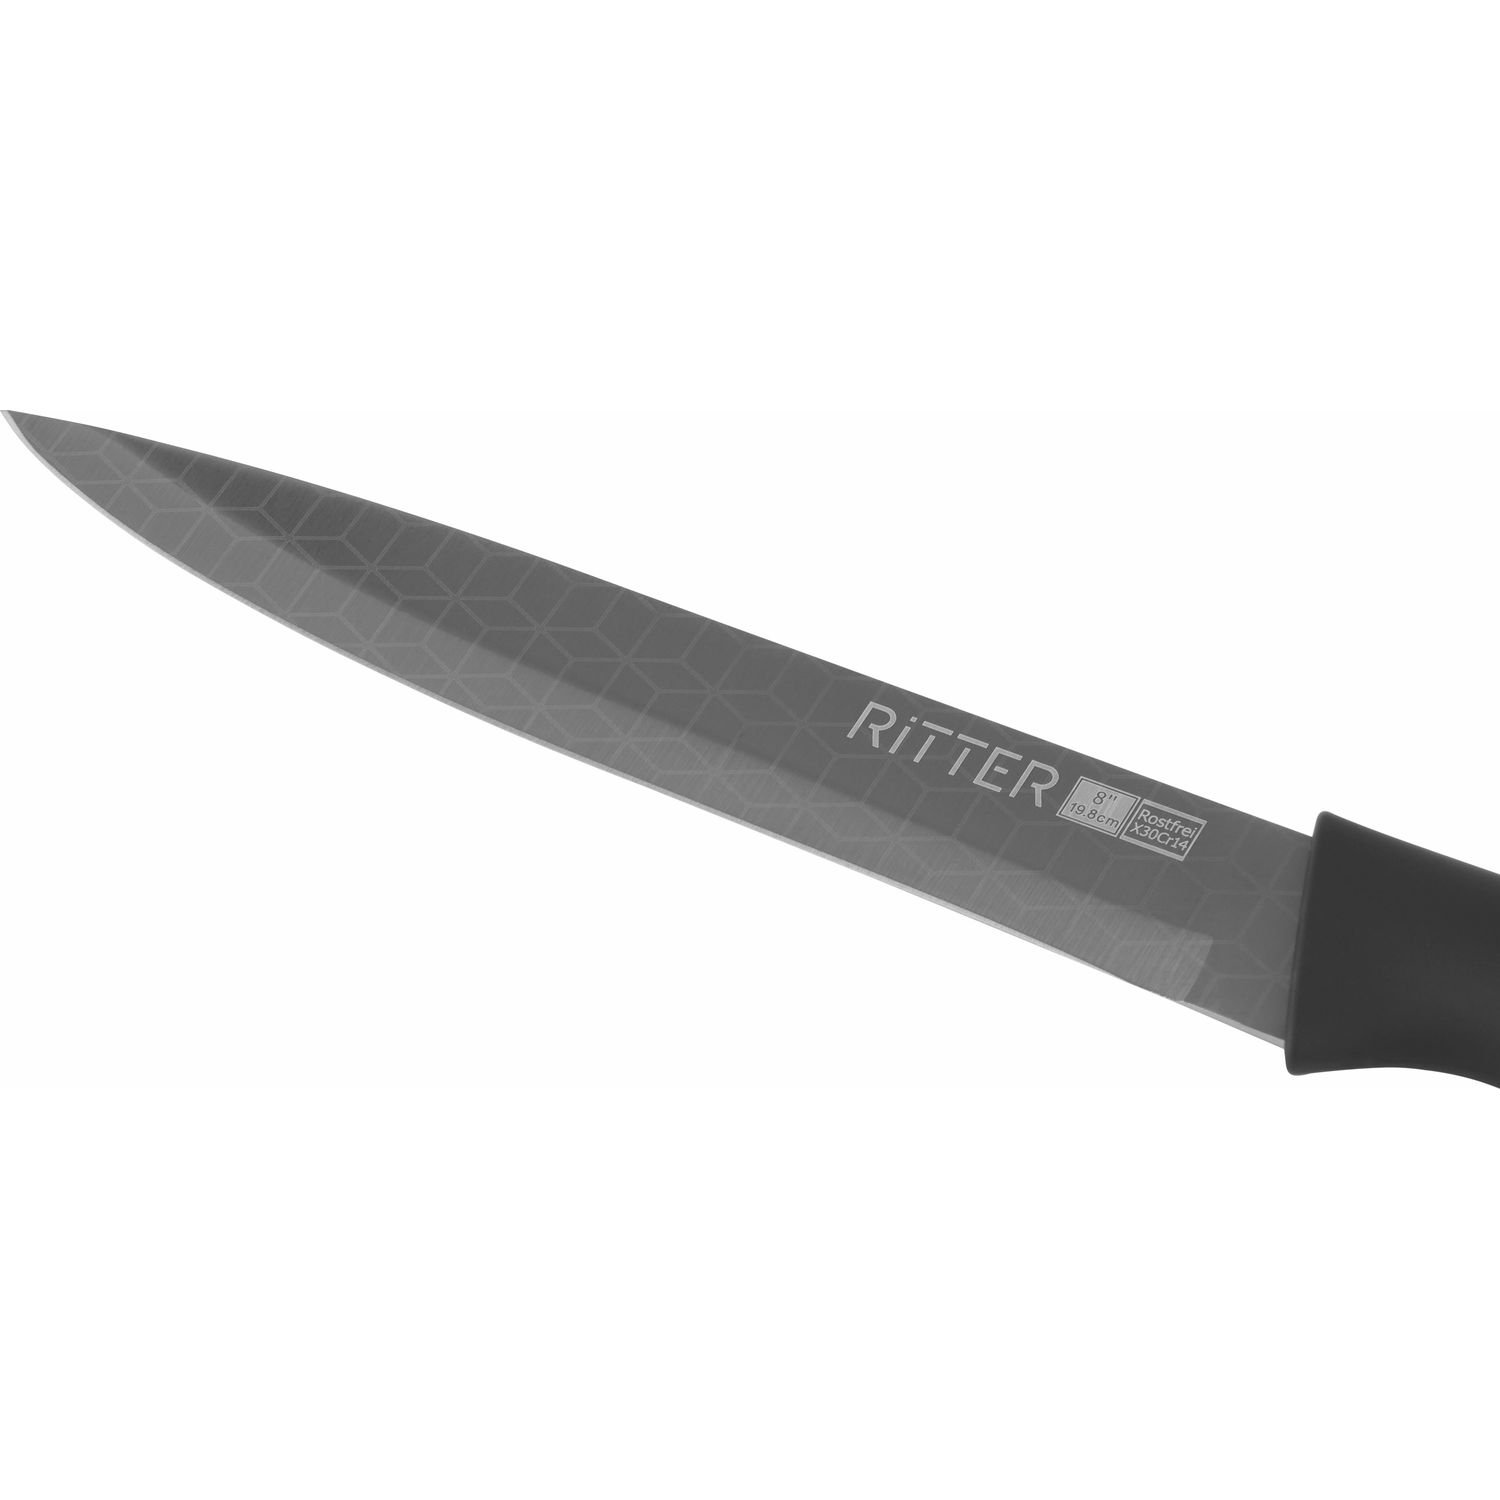 Нож Ritter слайсерный 19.7см (29-305-031) - фото 2